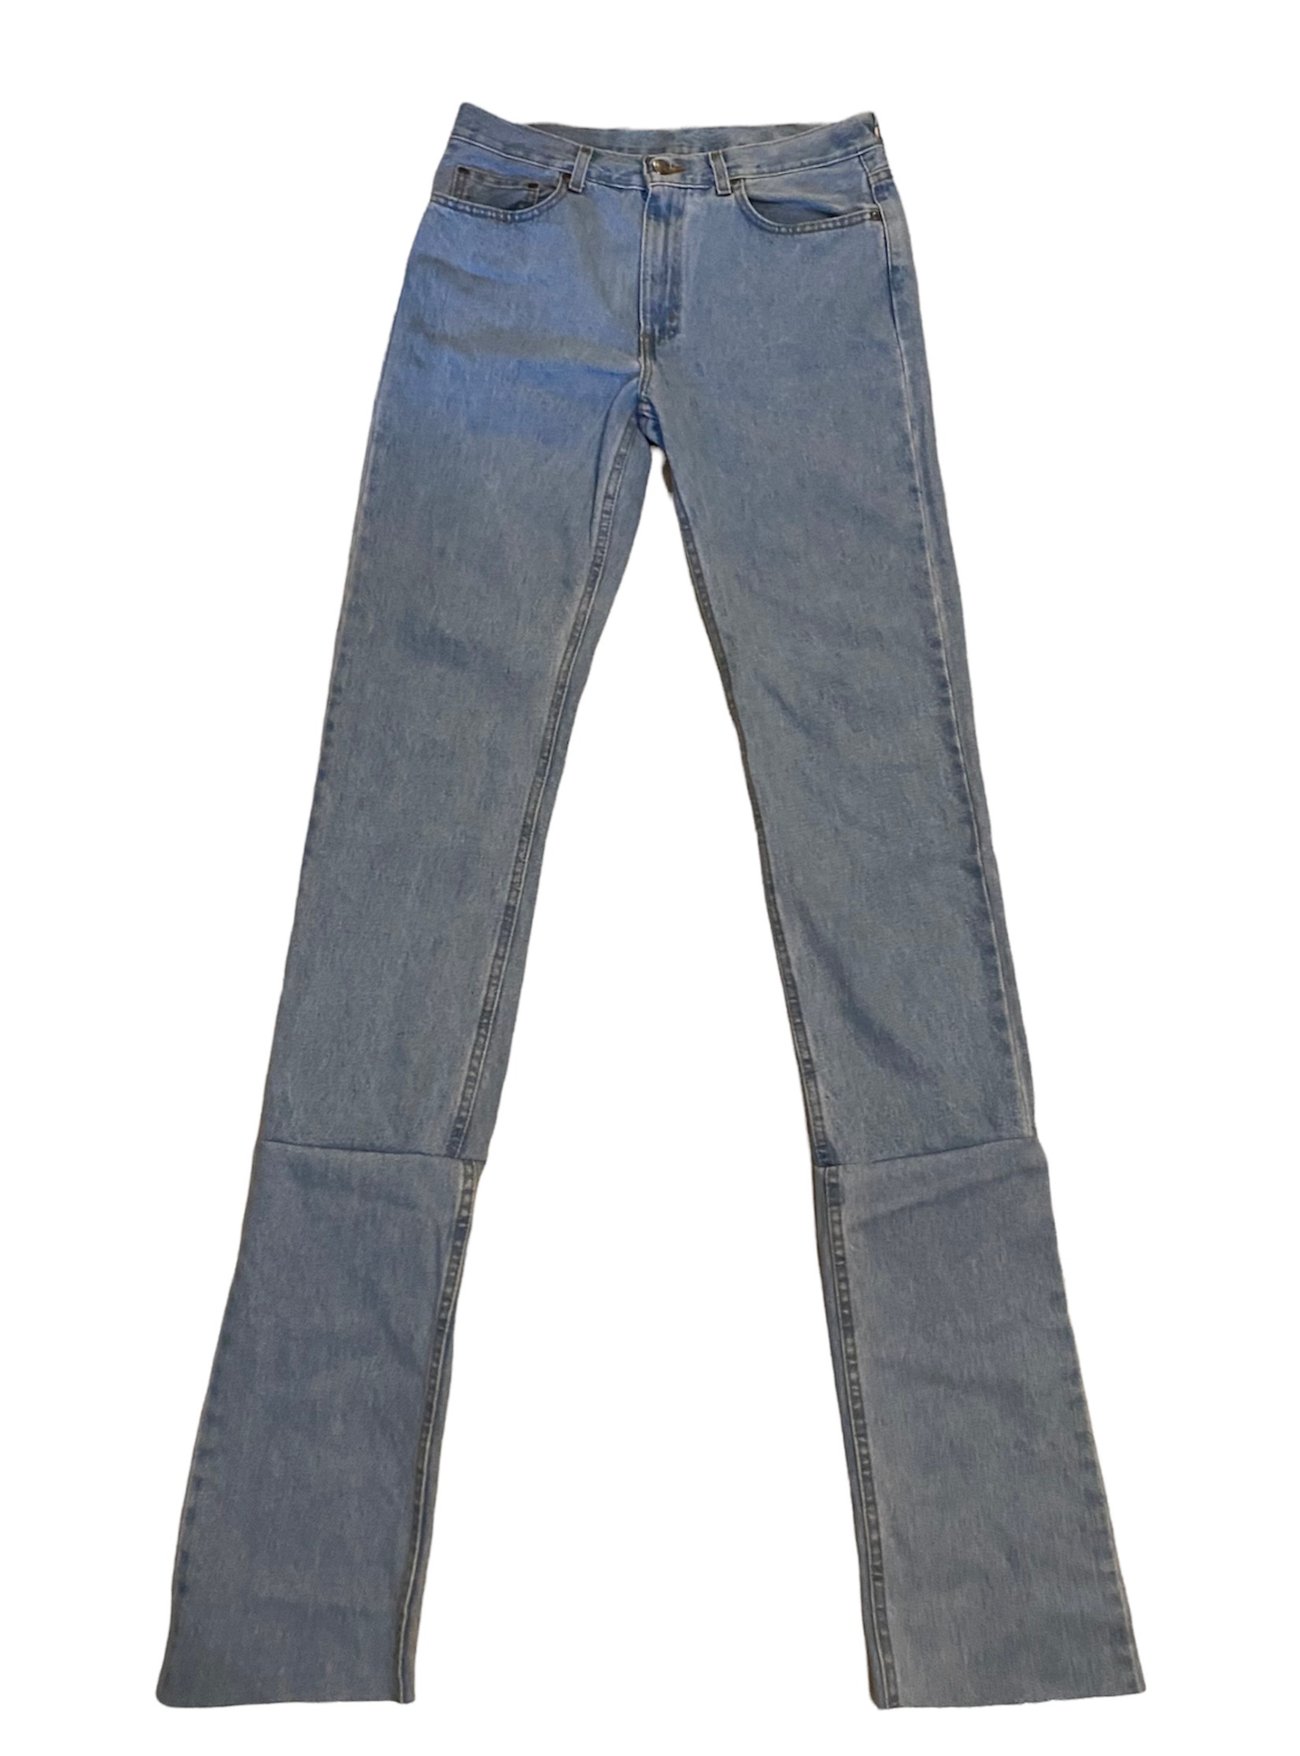 Blue Denim Stacked CUSTOM Jeans | PressurePants